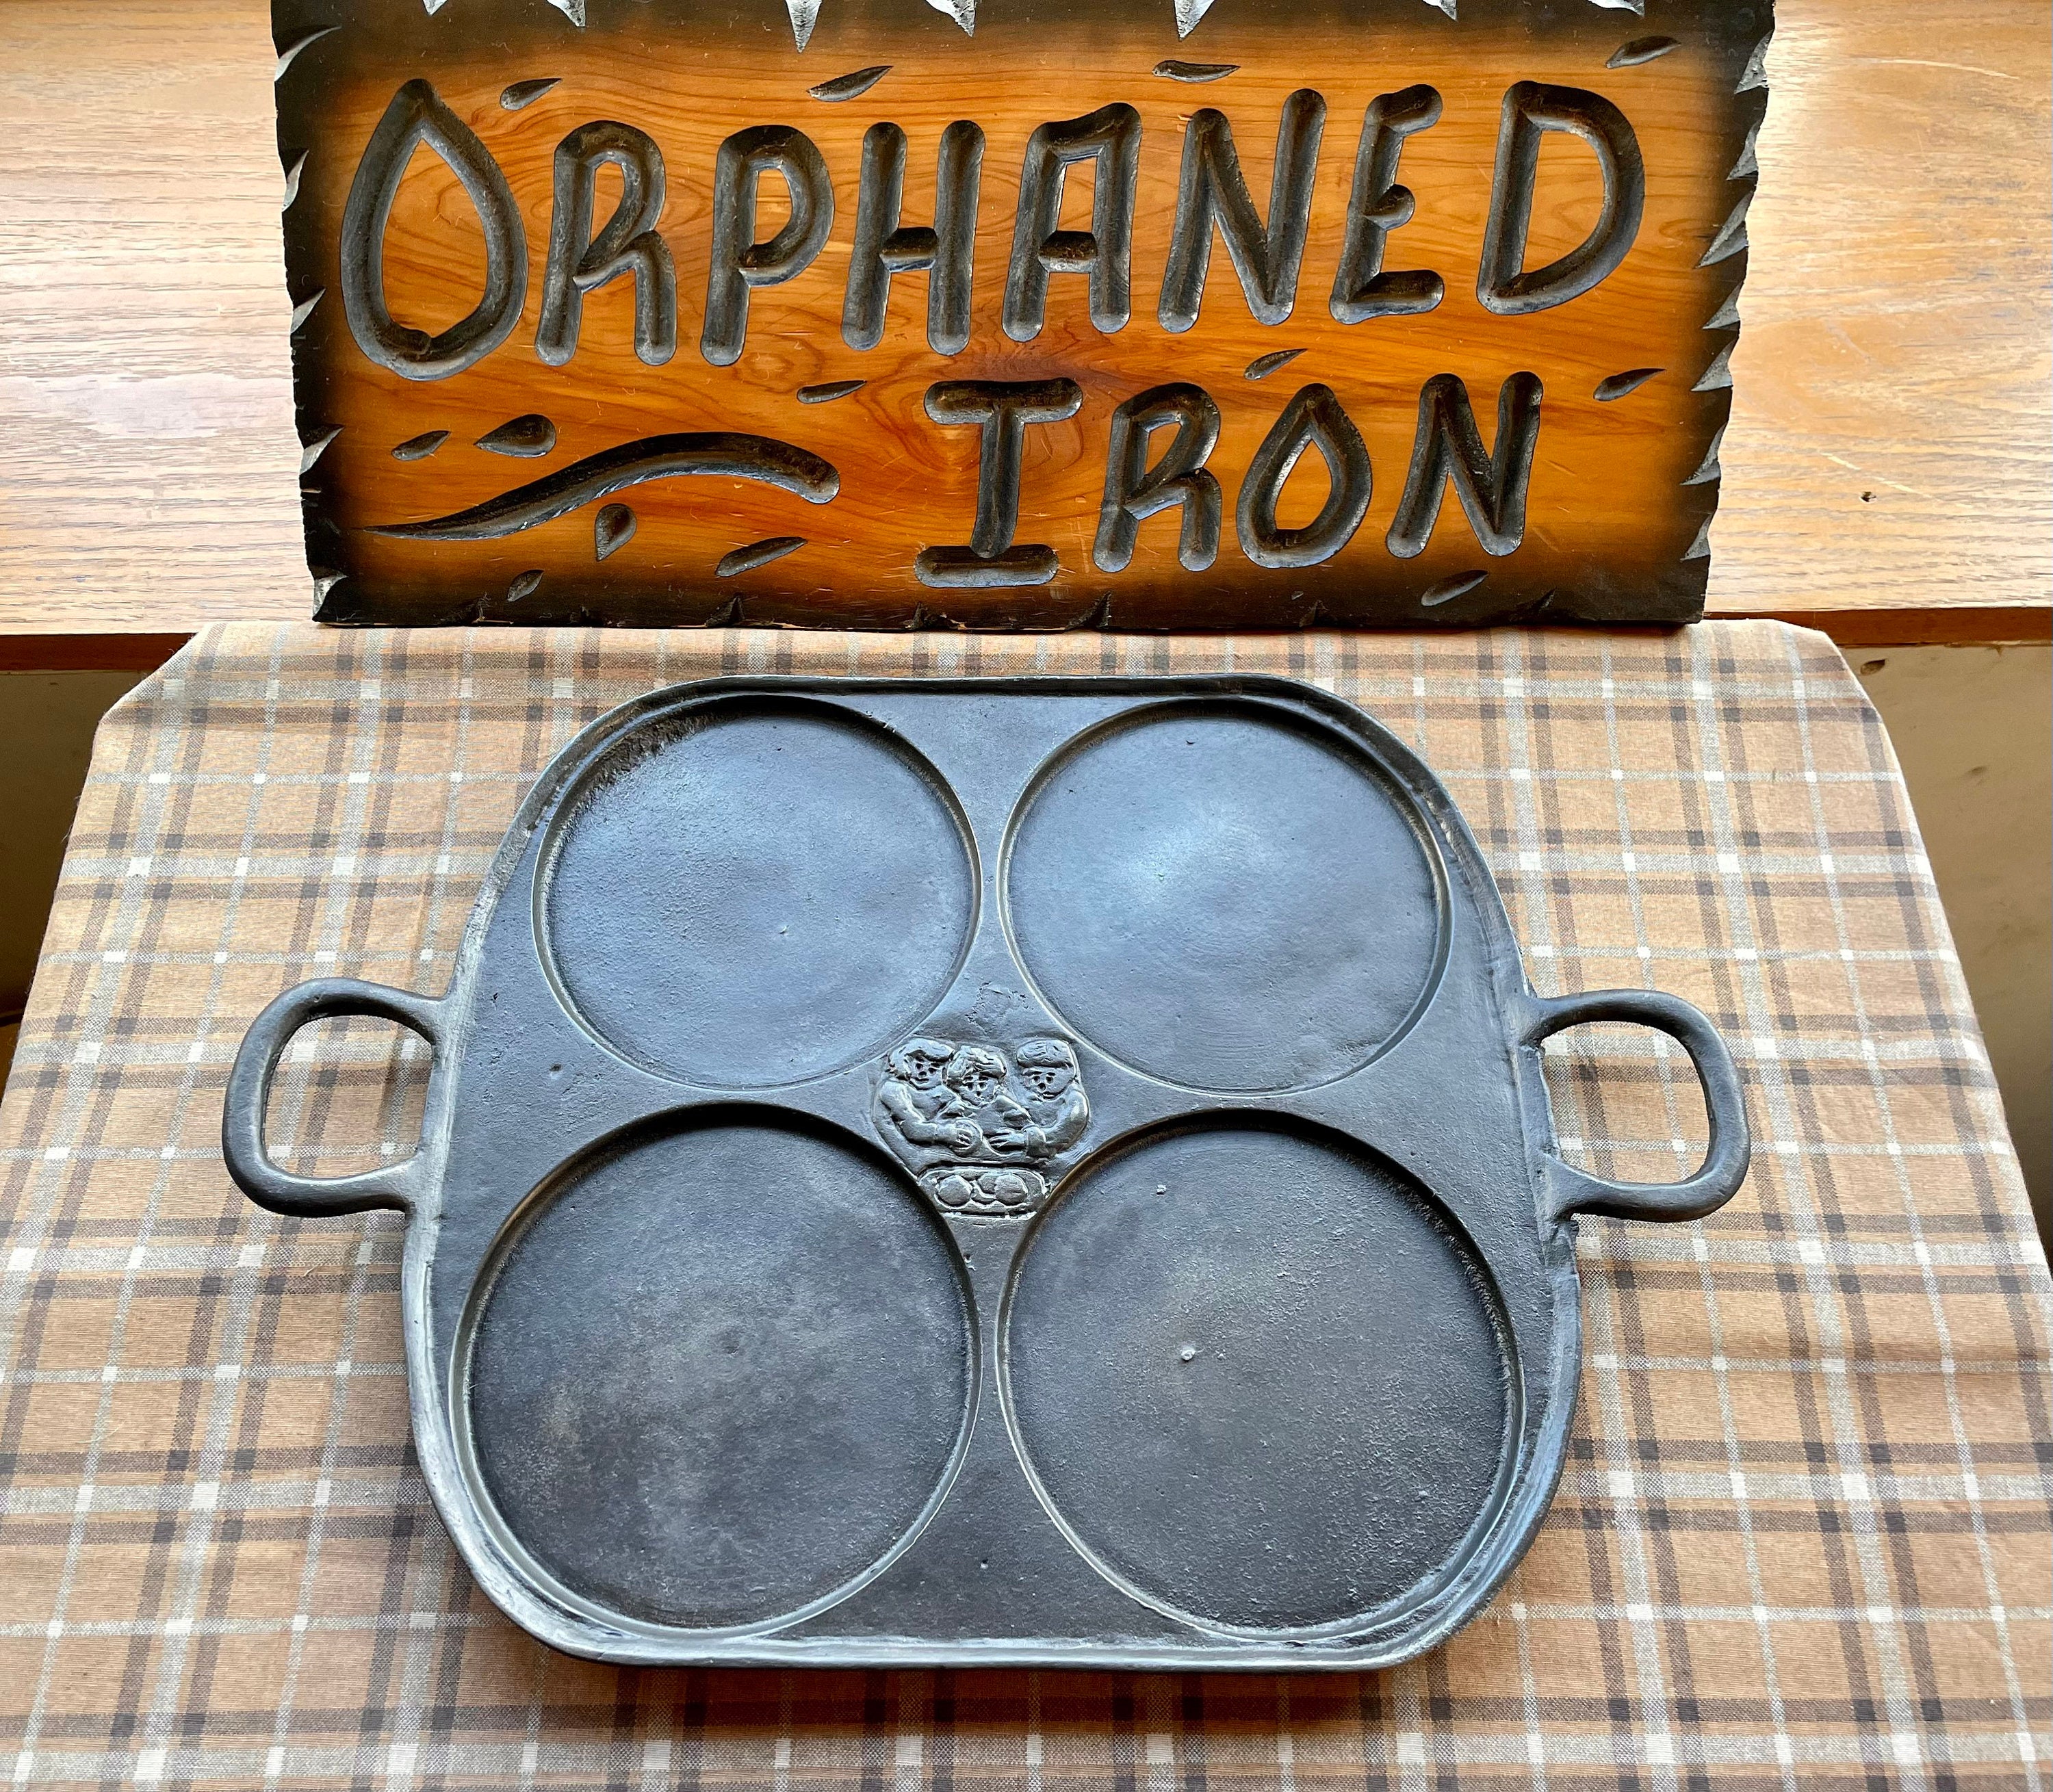 RARE! 1867 Three Count Pancake Flipper Griddle Cast Iron